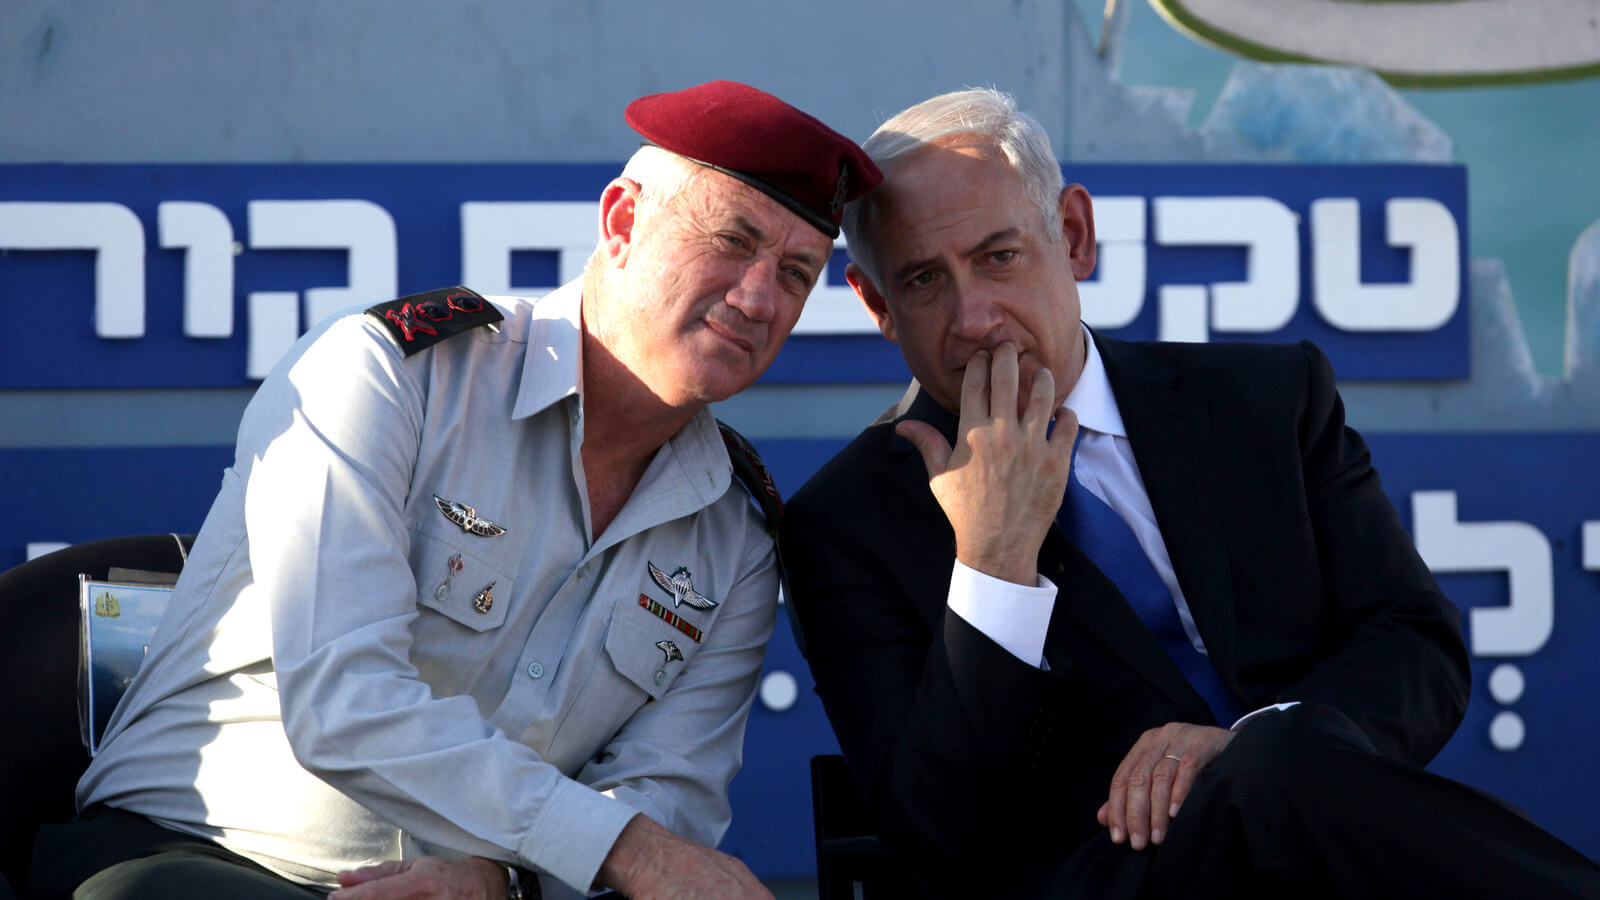 Israeli Prime Minister Benjamin Netanyahu, right, speaks with Israeli Chief of Staff Lt. Gen. Benny Gantz, during a graduation ceremony of navy officers in the northern port city of Haifa, Israel, Sept. 11, 2013. Dan Balilty | AP